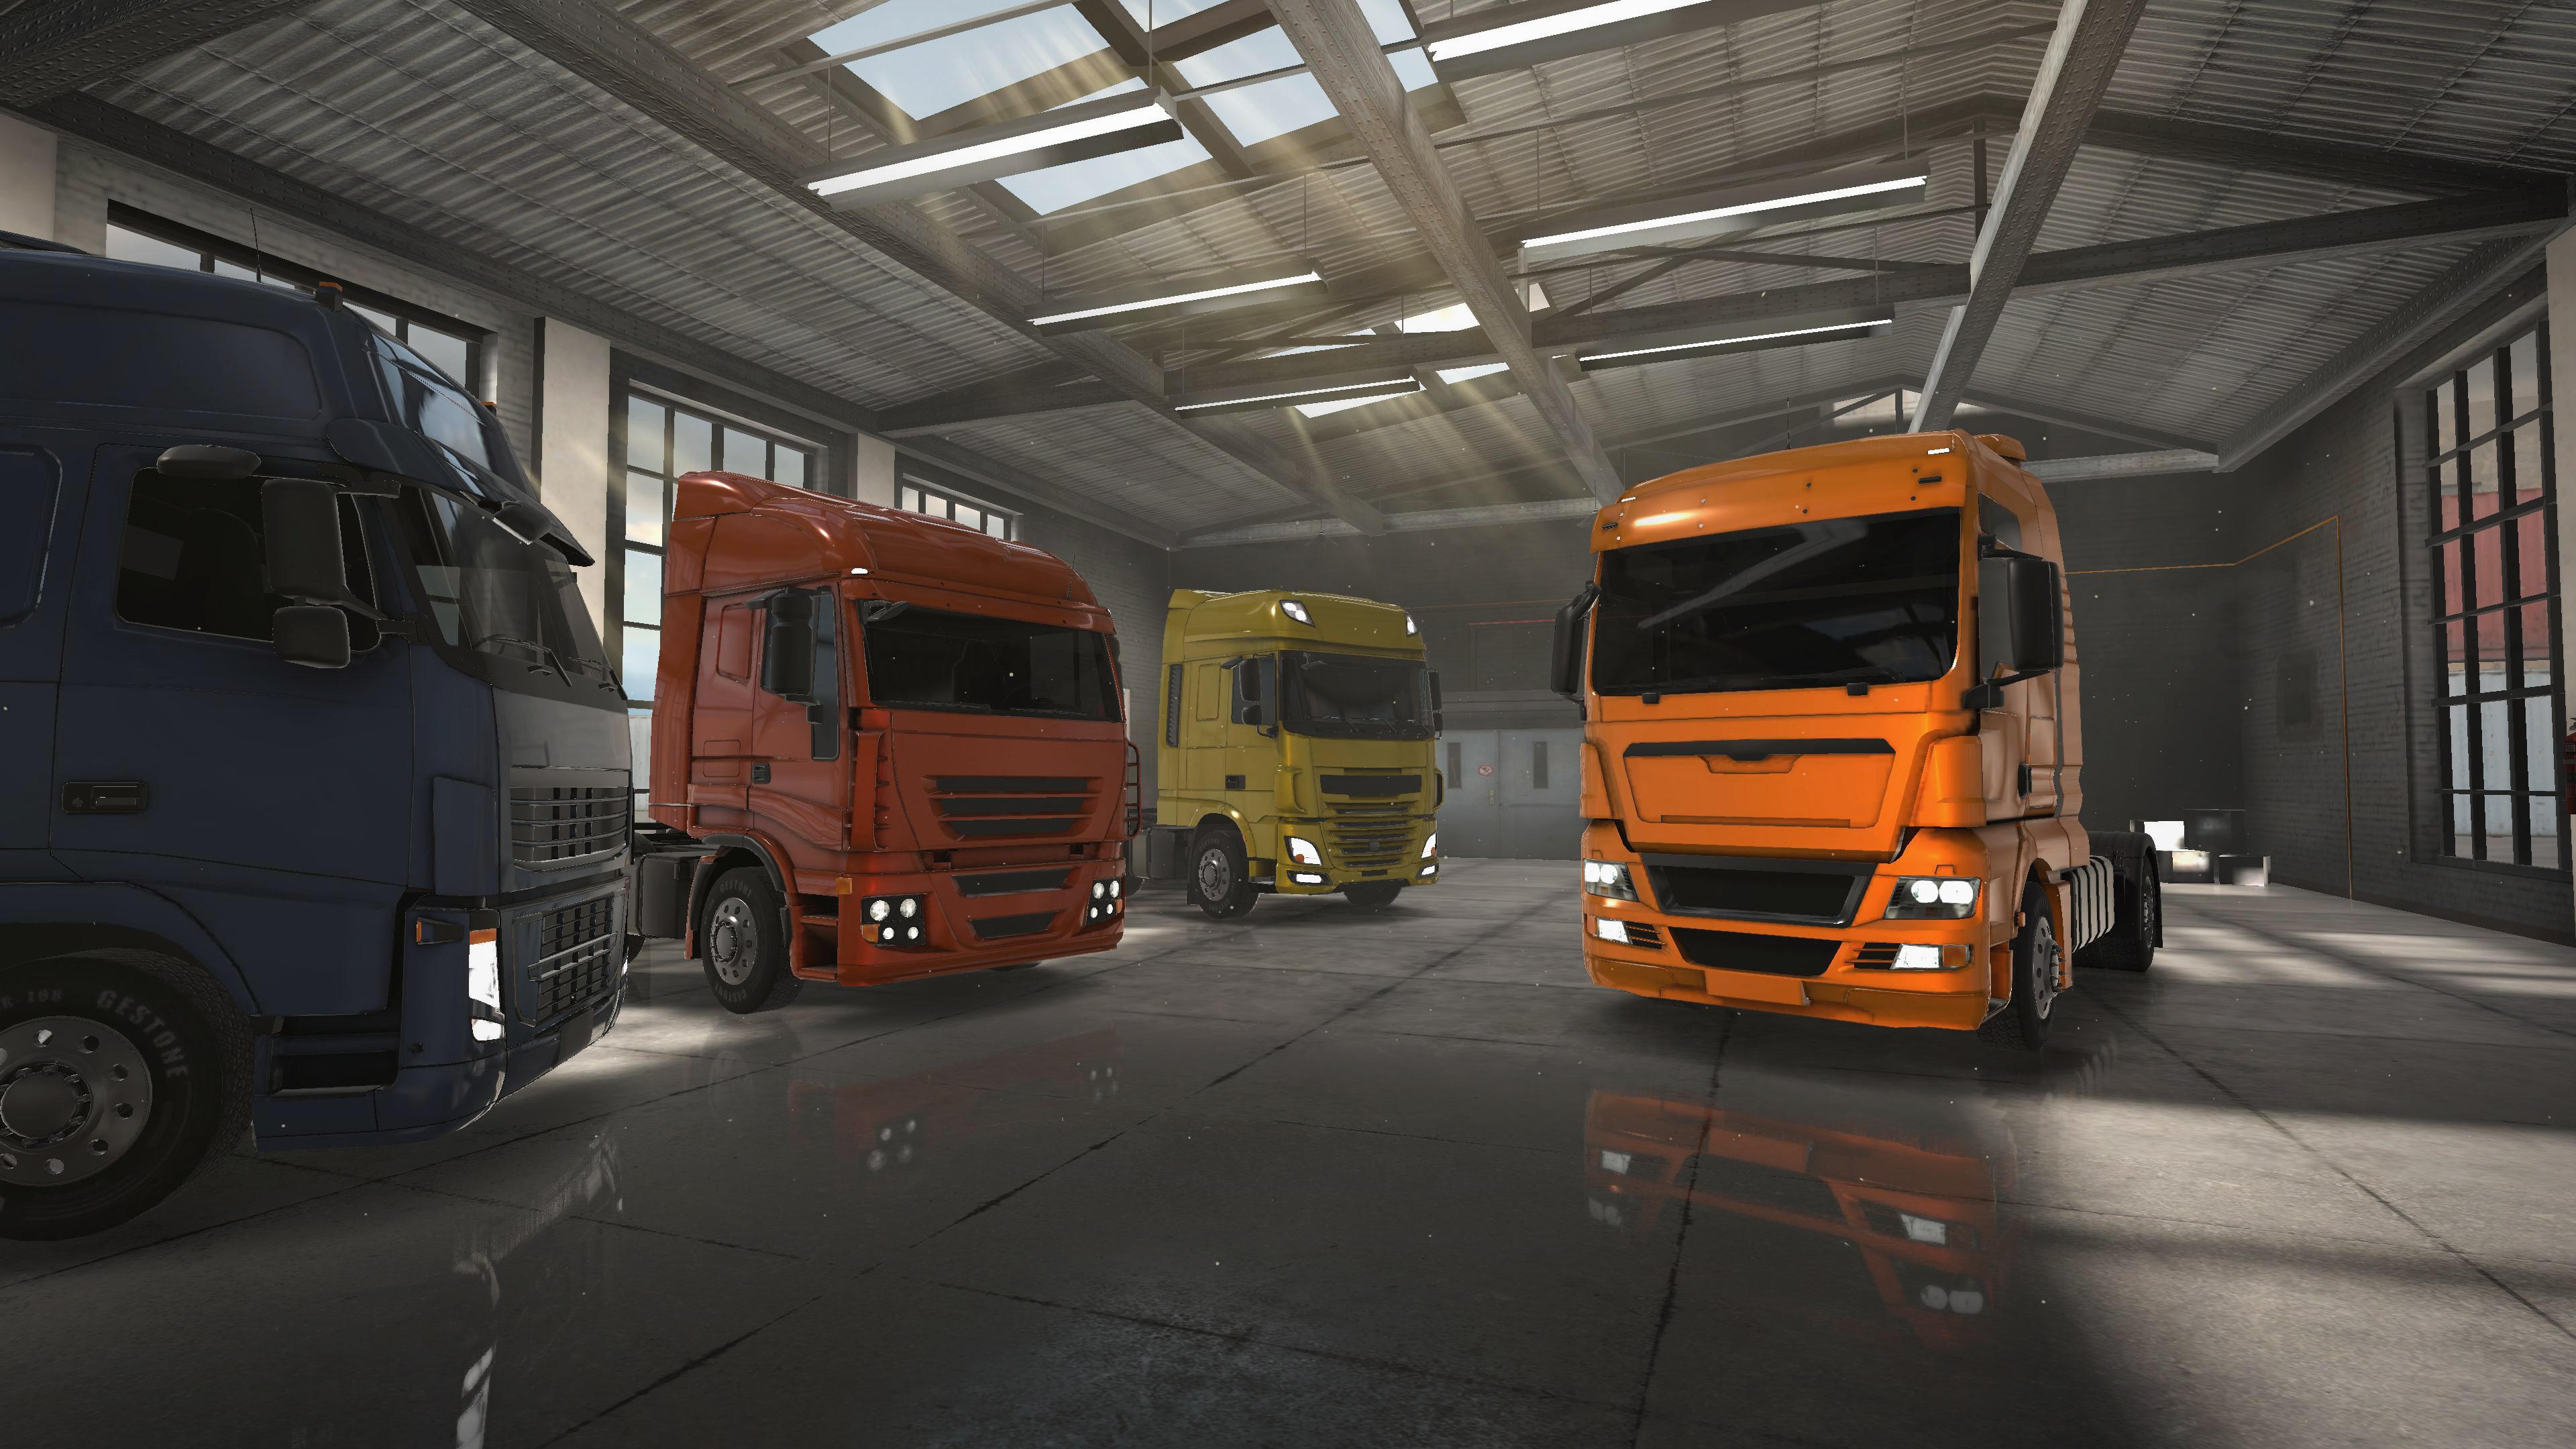 Truck Simulator Europe 